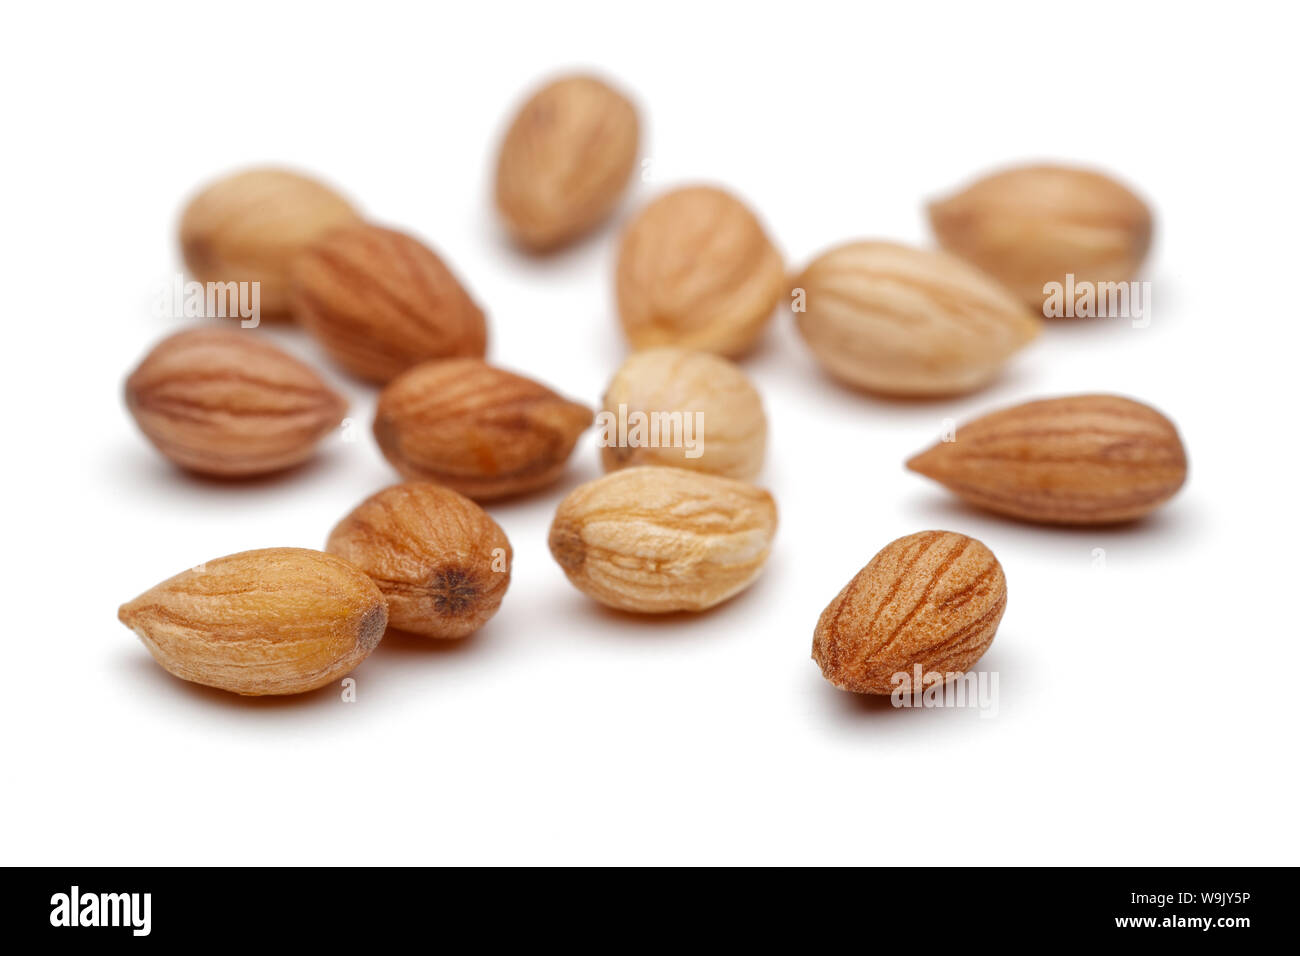 Heap of mahlep or mahaleb seeds isolated on white background Stock Photo